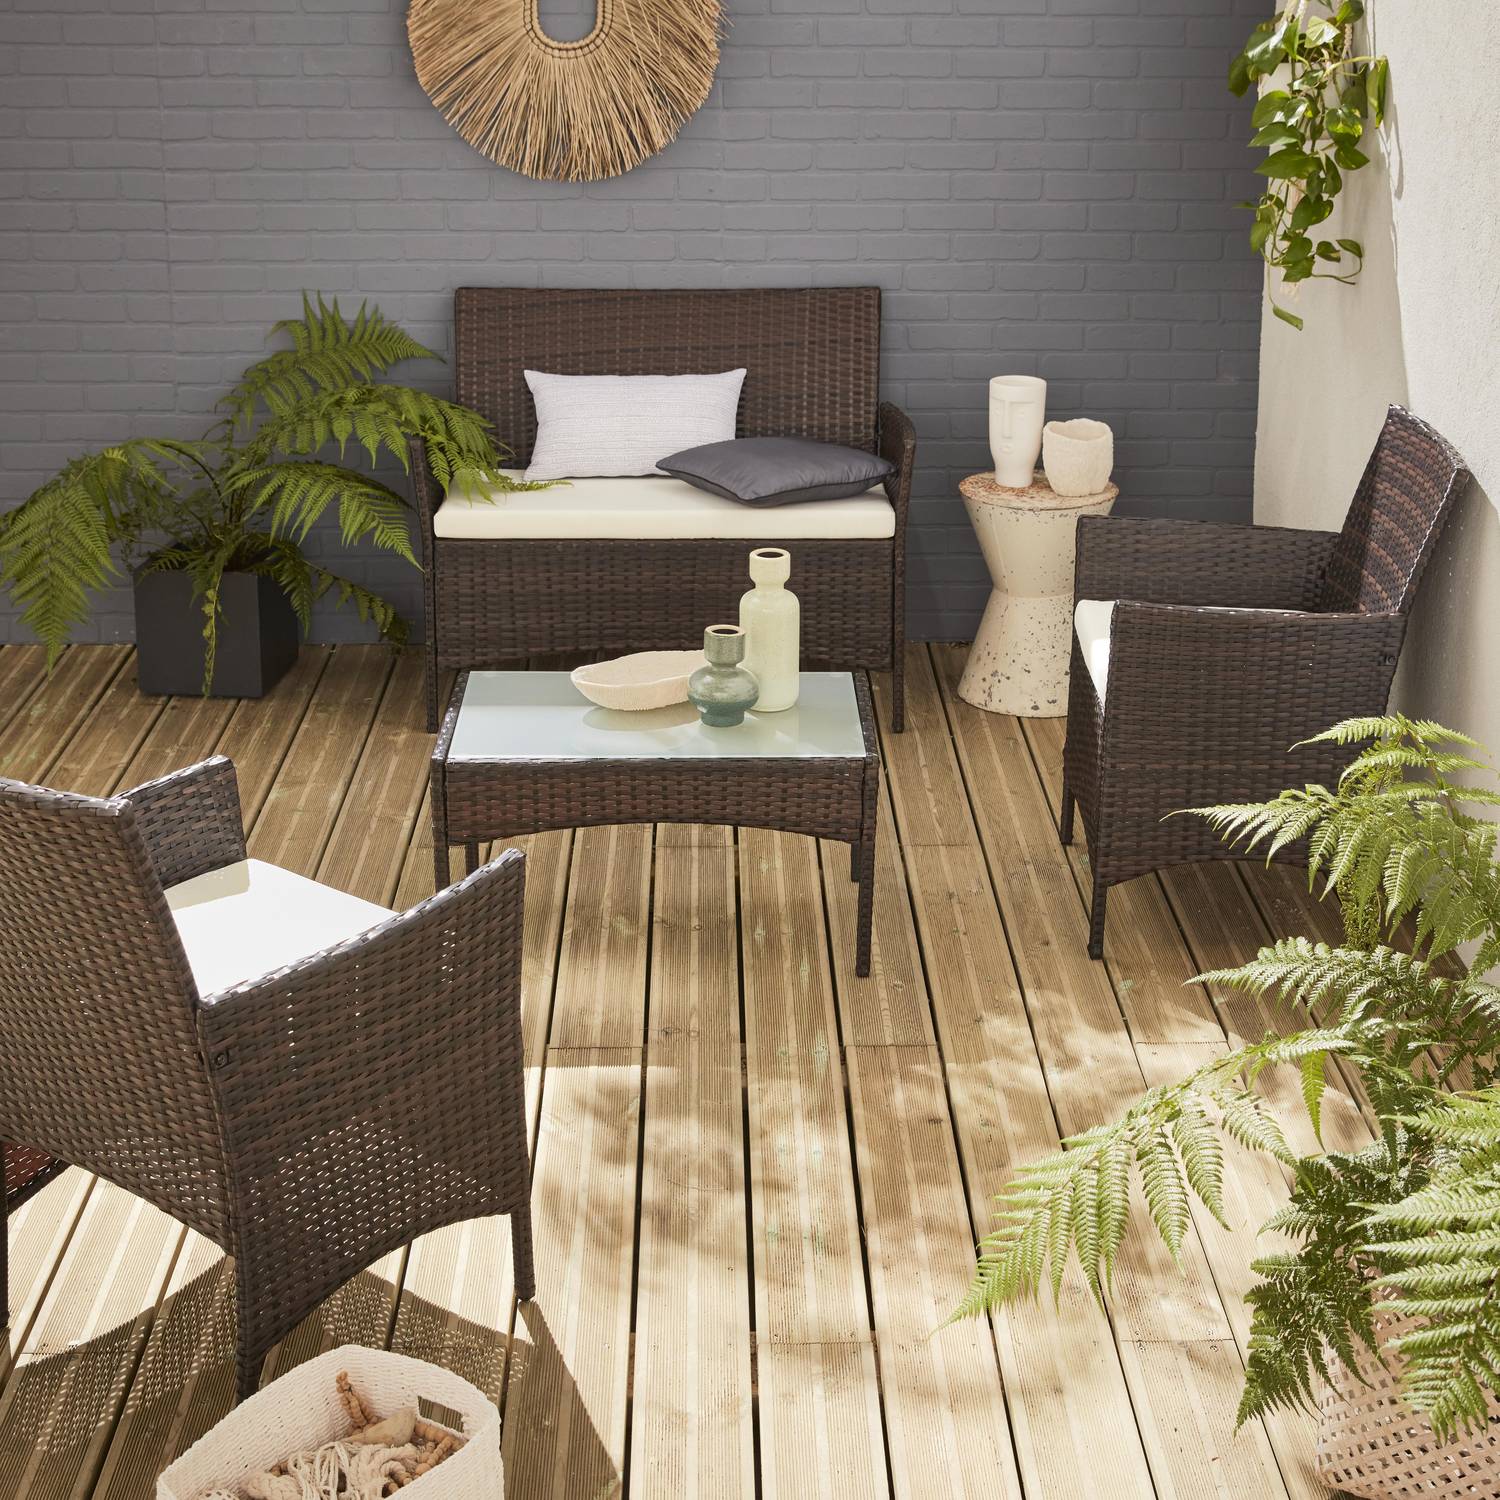 4-seater polyrattan garden sofa set - sofa, 2 armchairs, coffee table - Moltes - Brown rattan, Off-white cushions Photo1